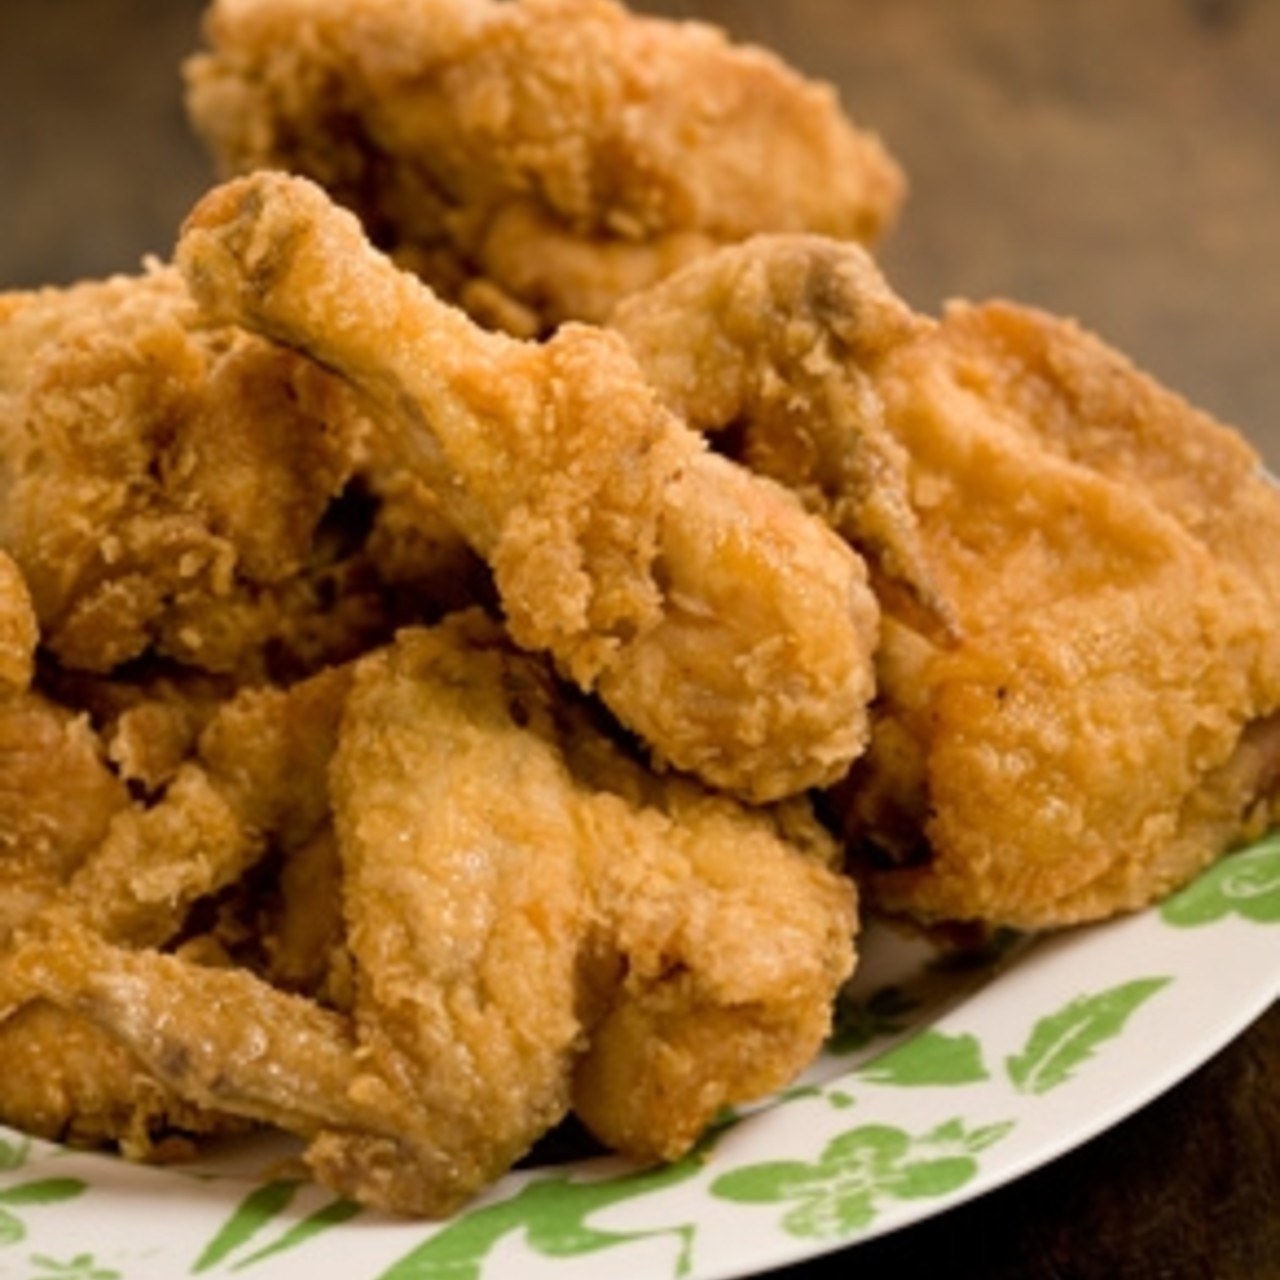 https://bigoven-res.cloudinary.com/image/upload/t_recipe-1280/southern-fried-chicken-paula-deen.jpg